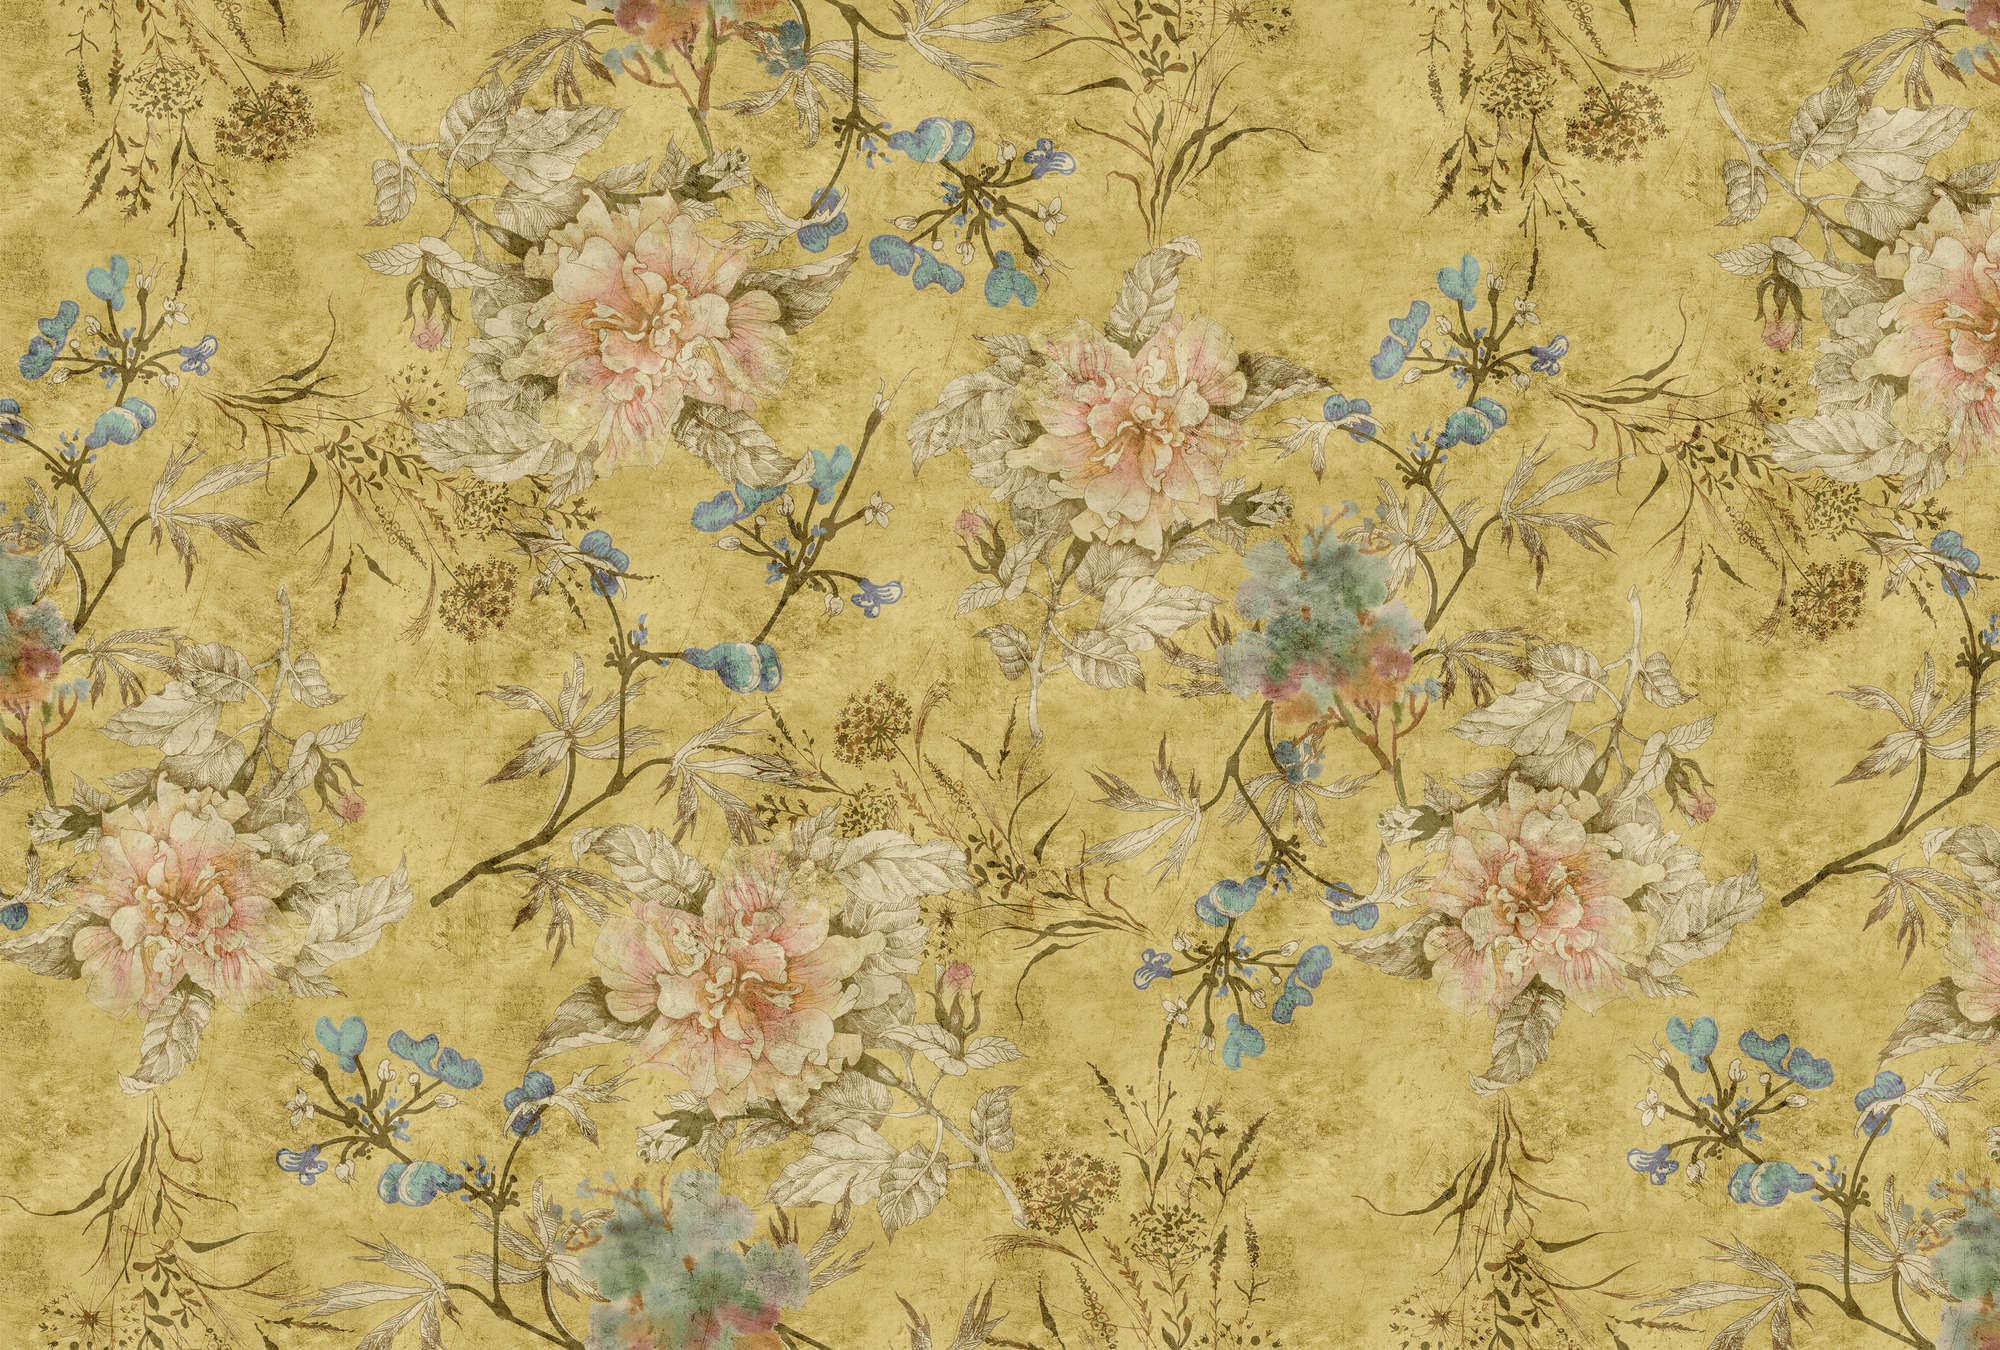             Tenderblossom 2 - Vintage Look Floral Wallpaper- Scratch Texture - Yellow | Matt Smooth Non-woven
        